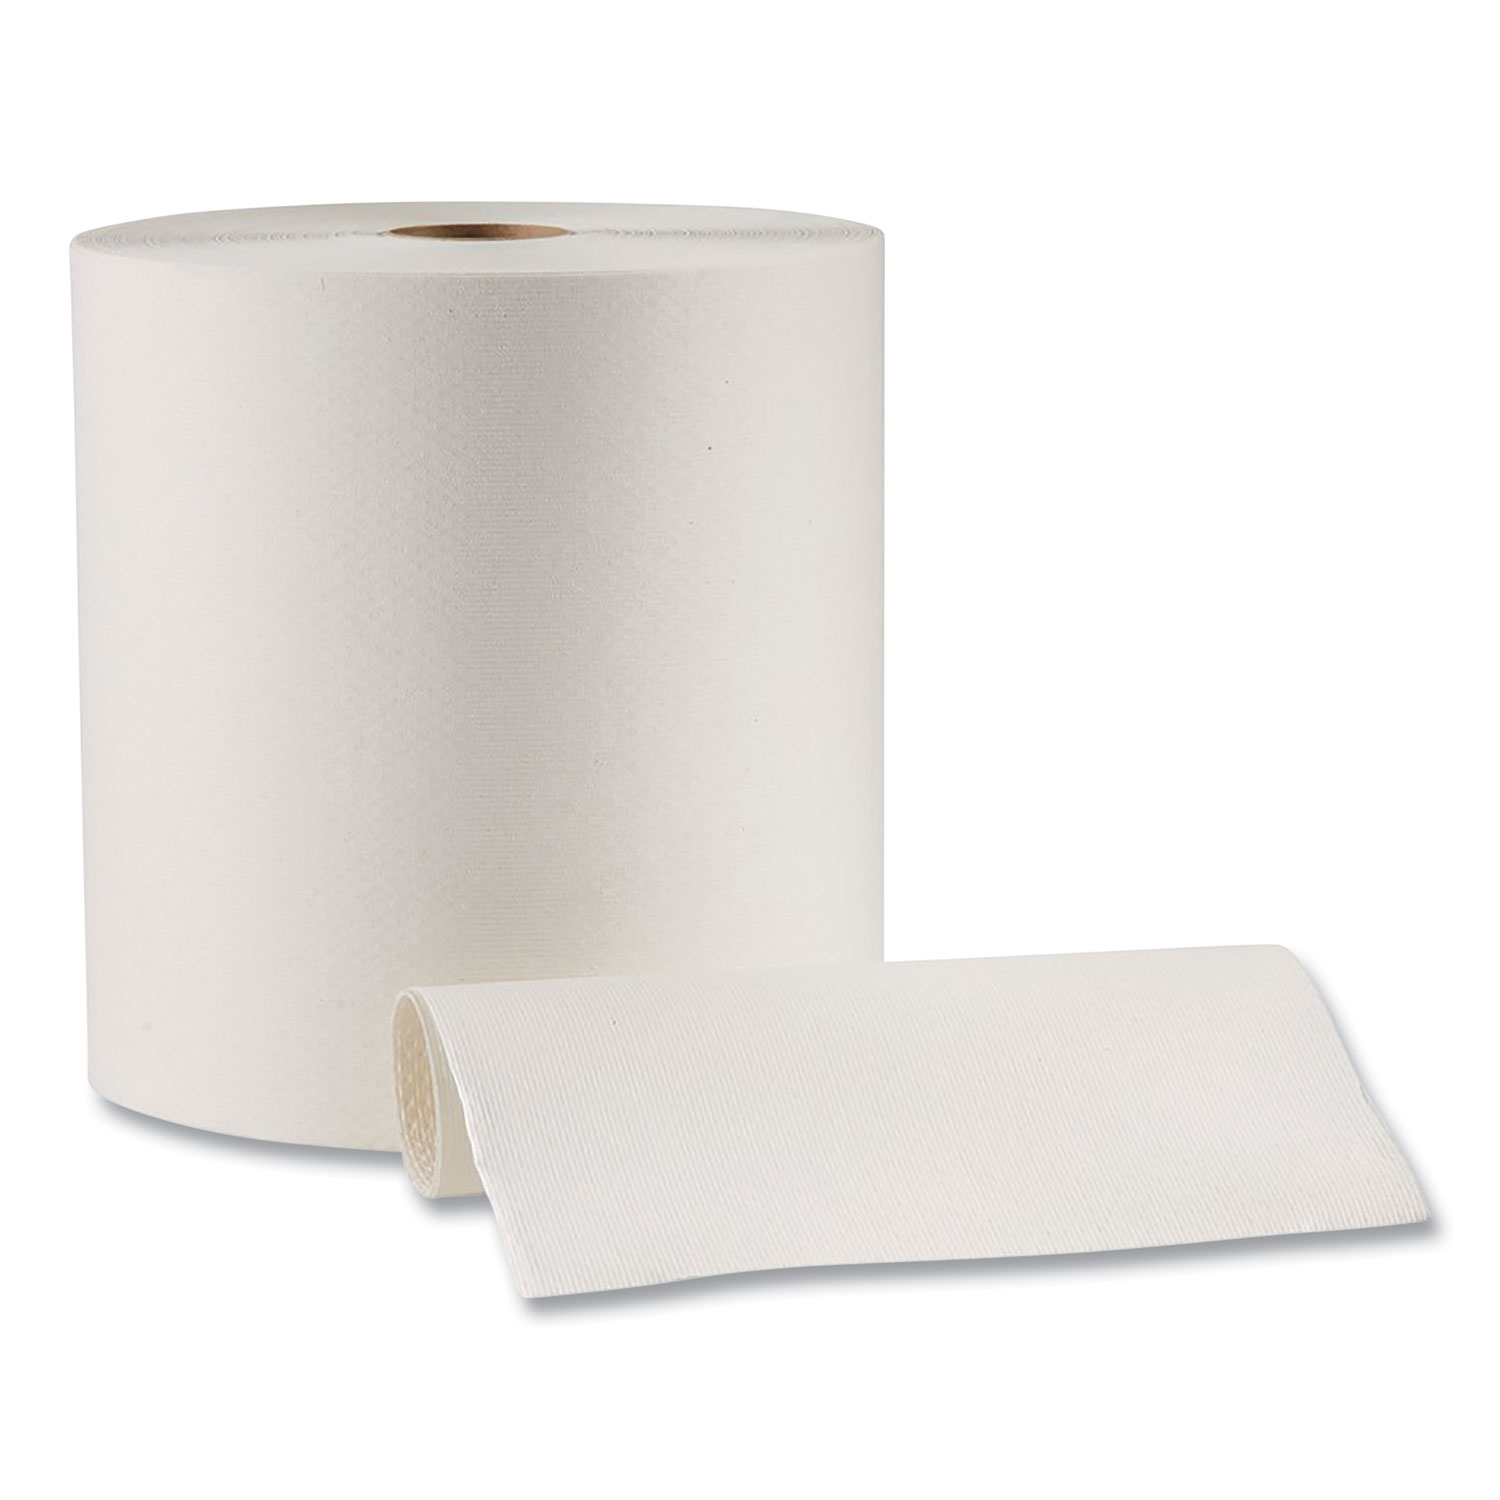 8 x 350' White Hardwound Paper Towel Roll - 12/Case